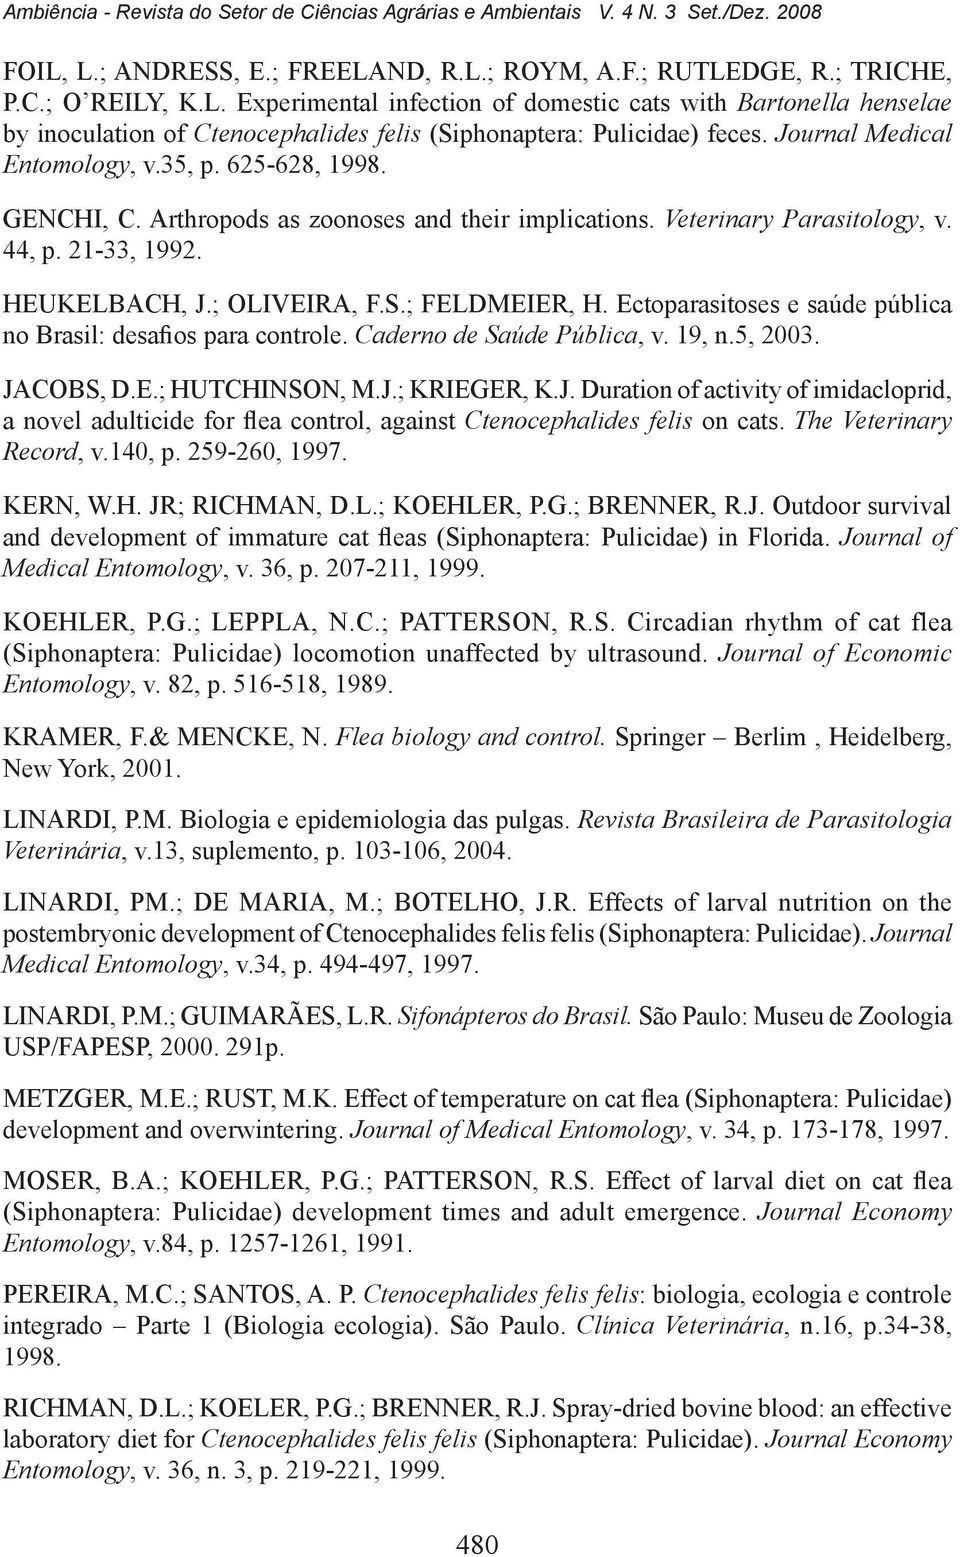 Journal Medical Entomology, v.35, p. 625-628, 1998. GENCHI, C. Arthropods as zoonoses and their implications. Veterinary Parasitology, v. 44, p. 21-33, 1992. HEUKELBACH, J.; OLIVEIRA, F.S.